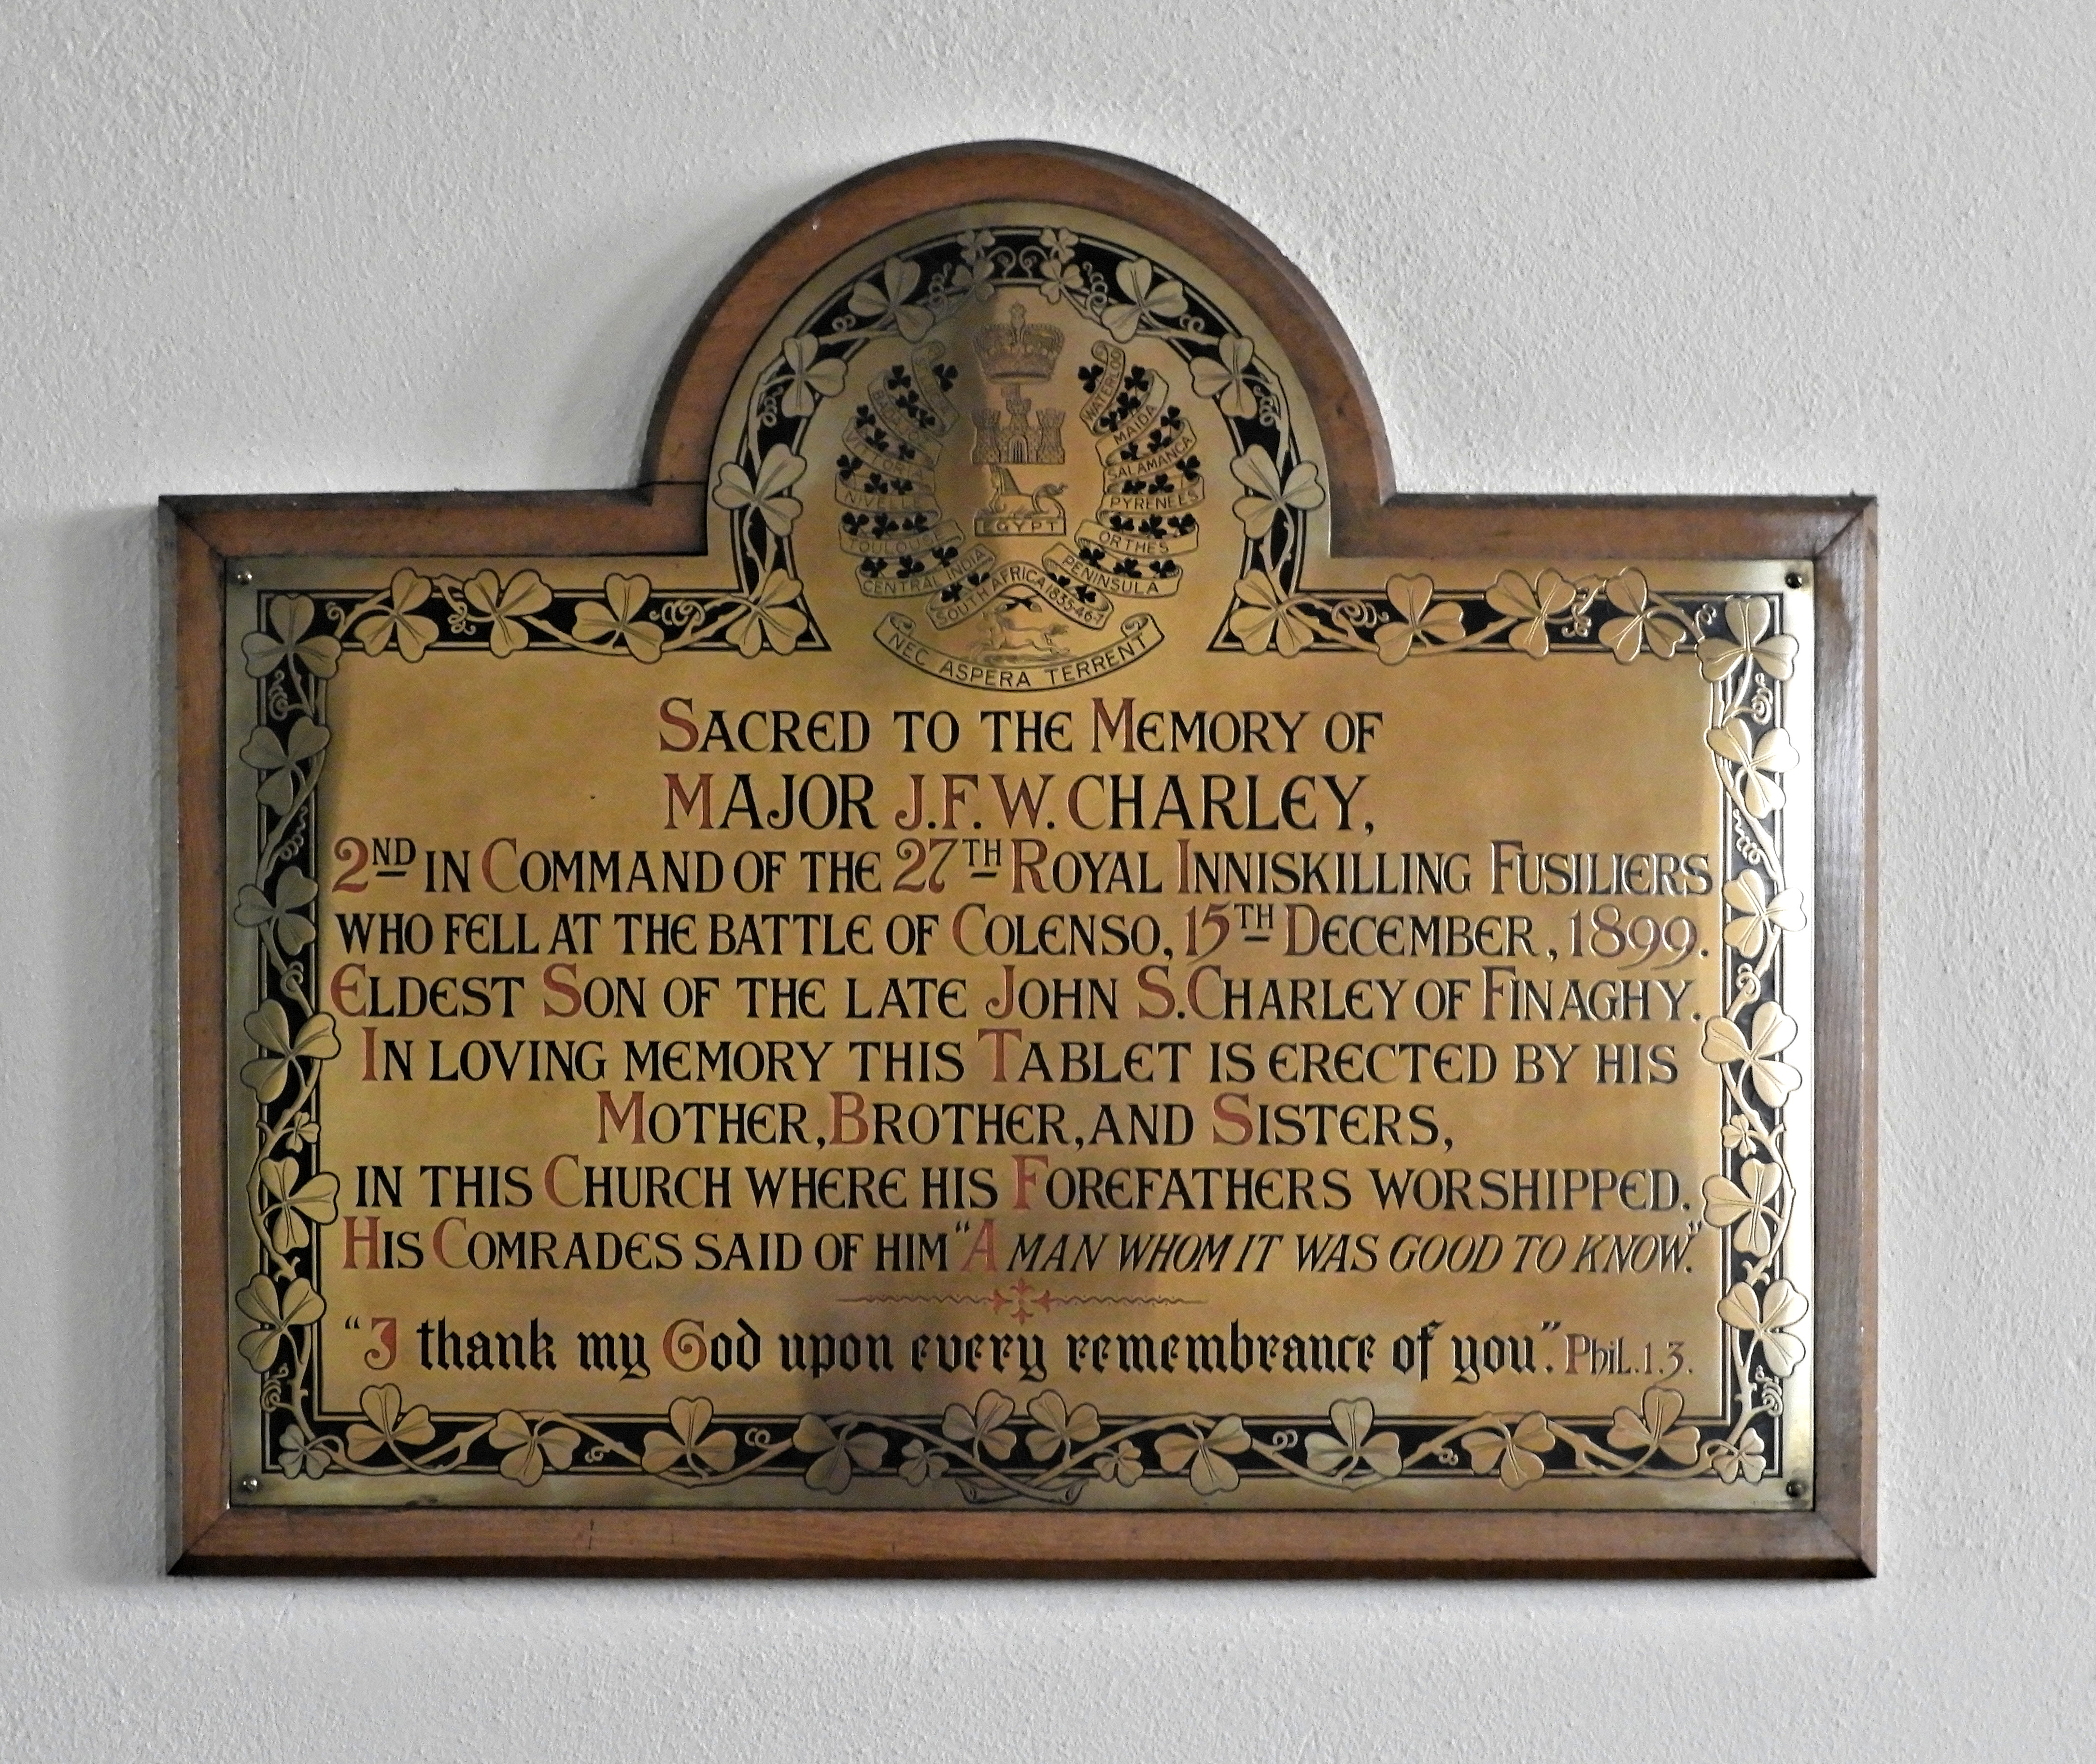 John Francis William CHARLEY